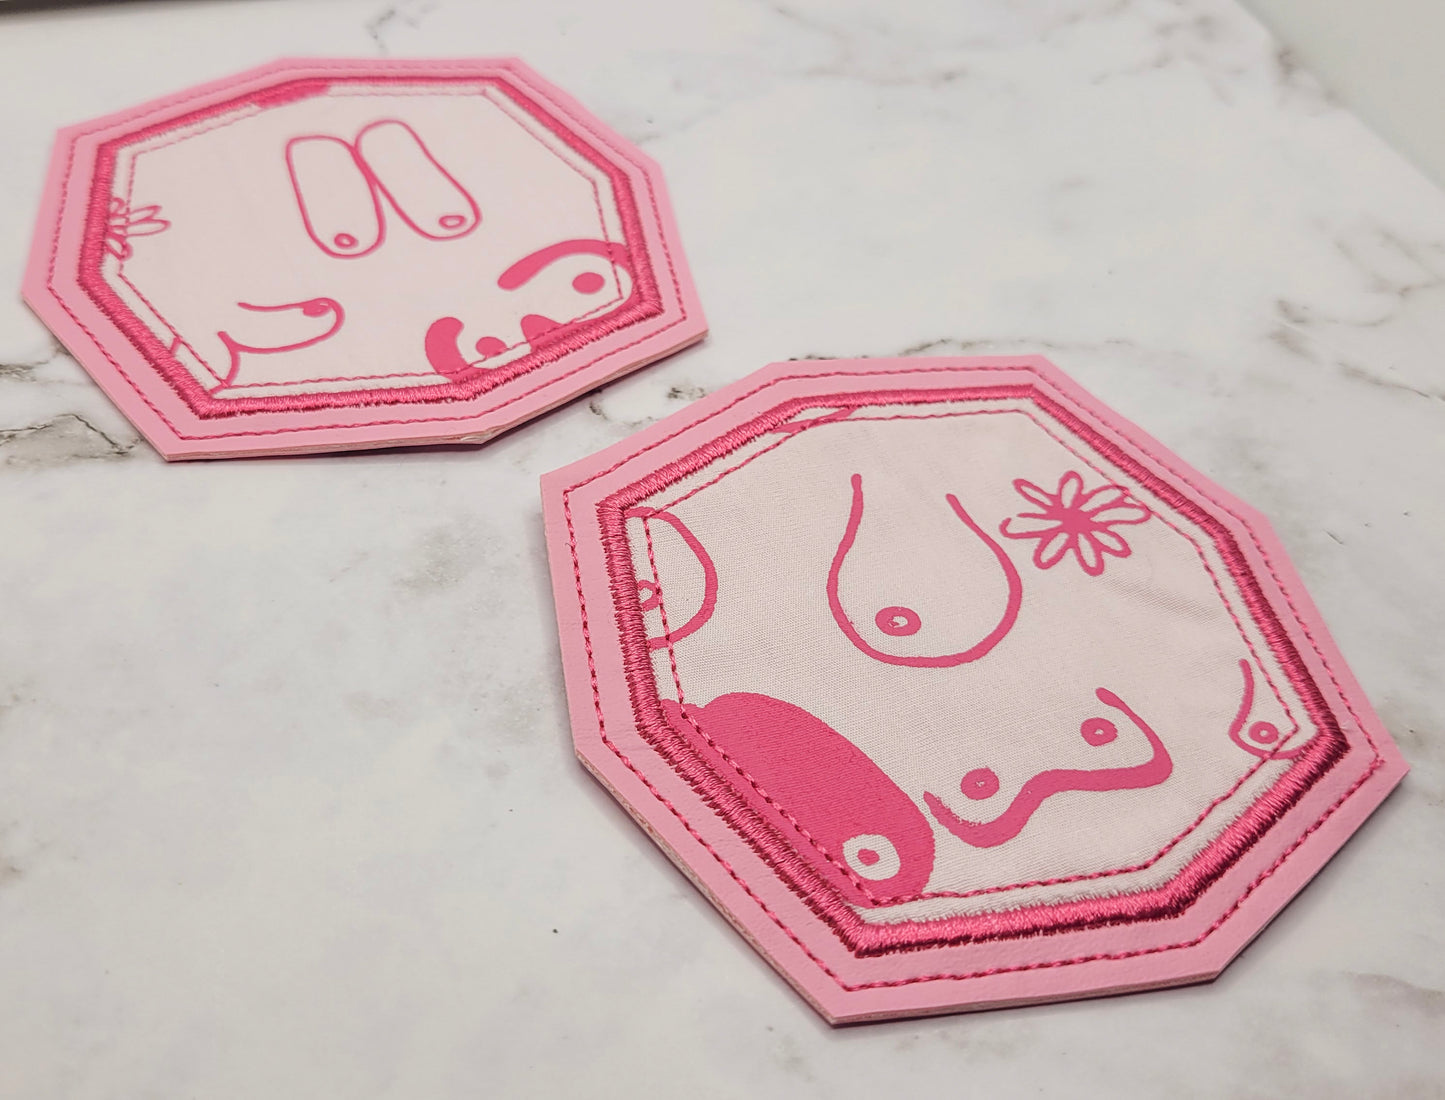 Boob Print Coasters